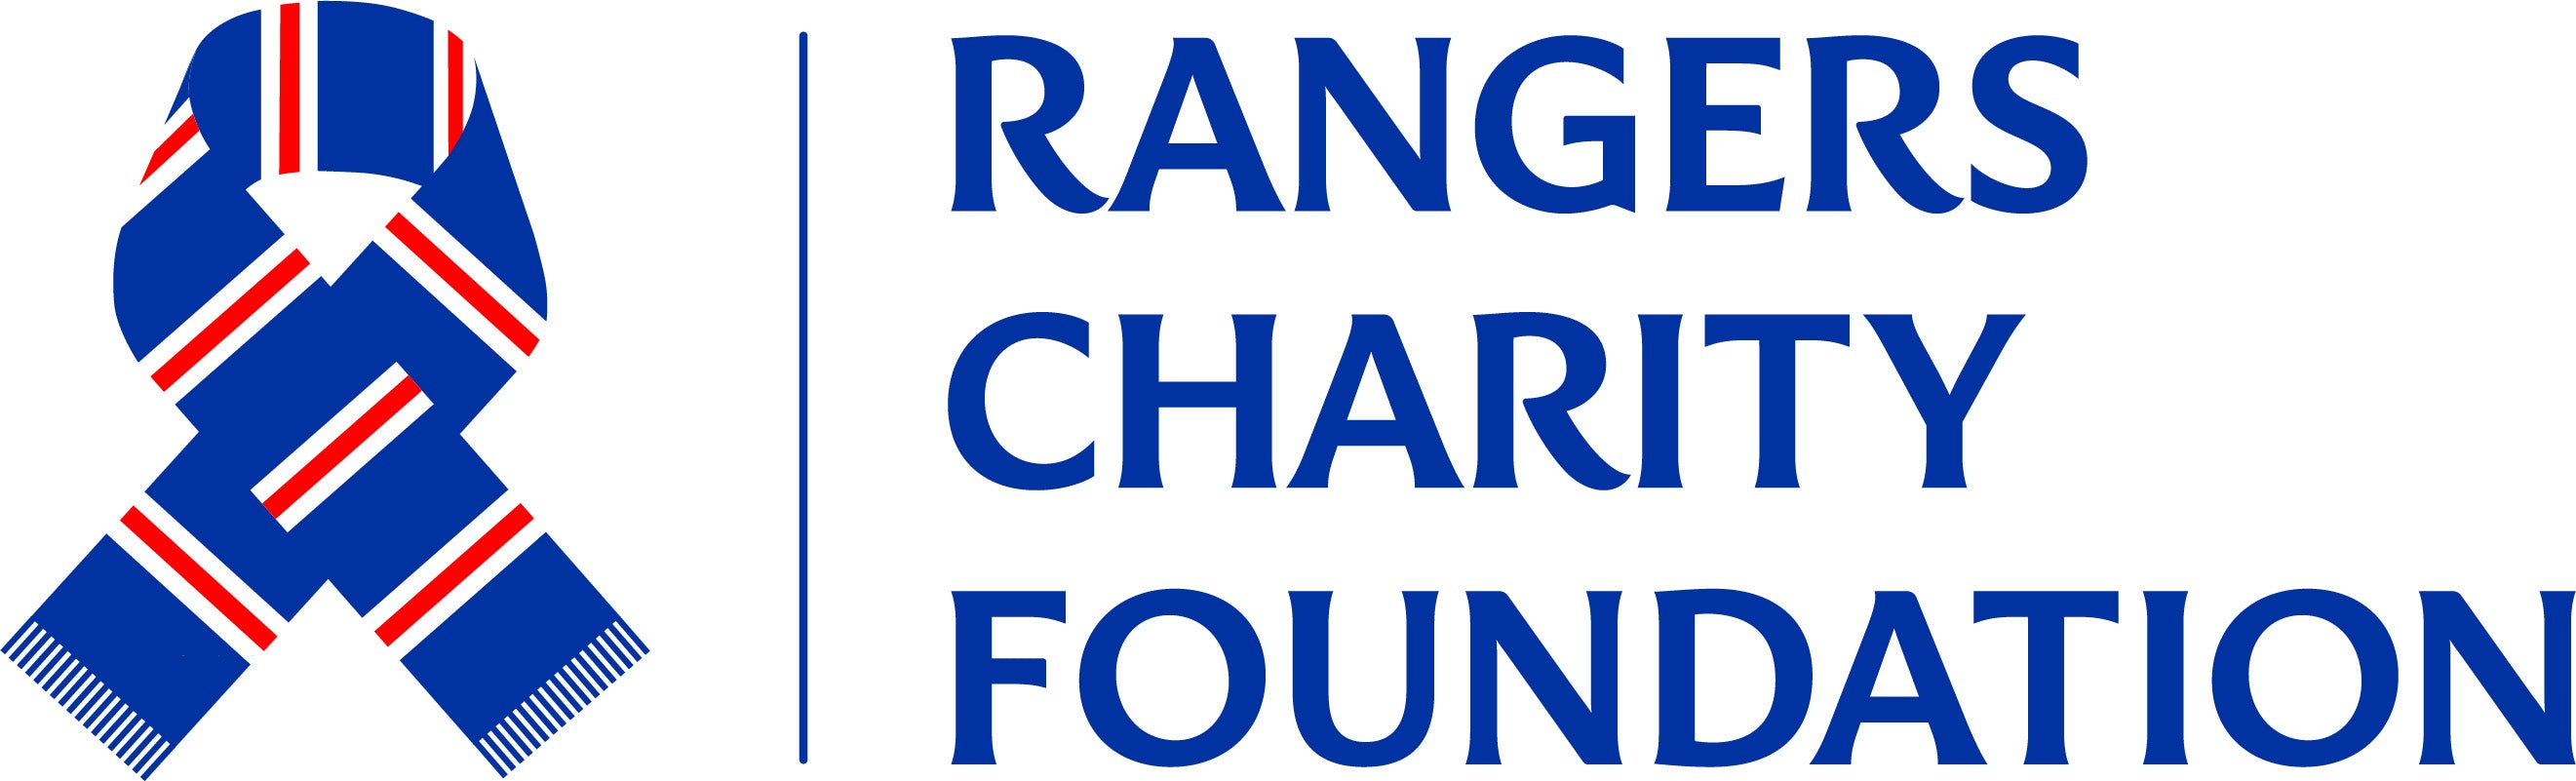 Rangers Charity Foundation Shop